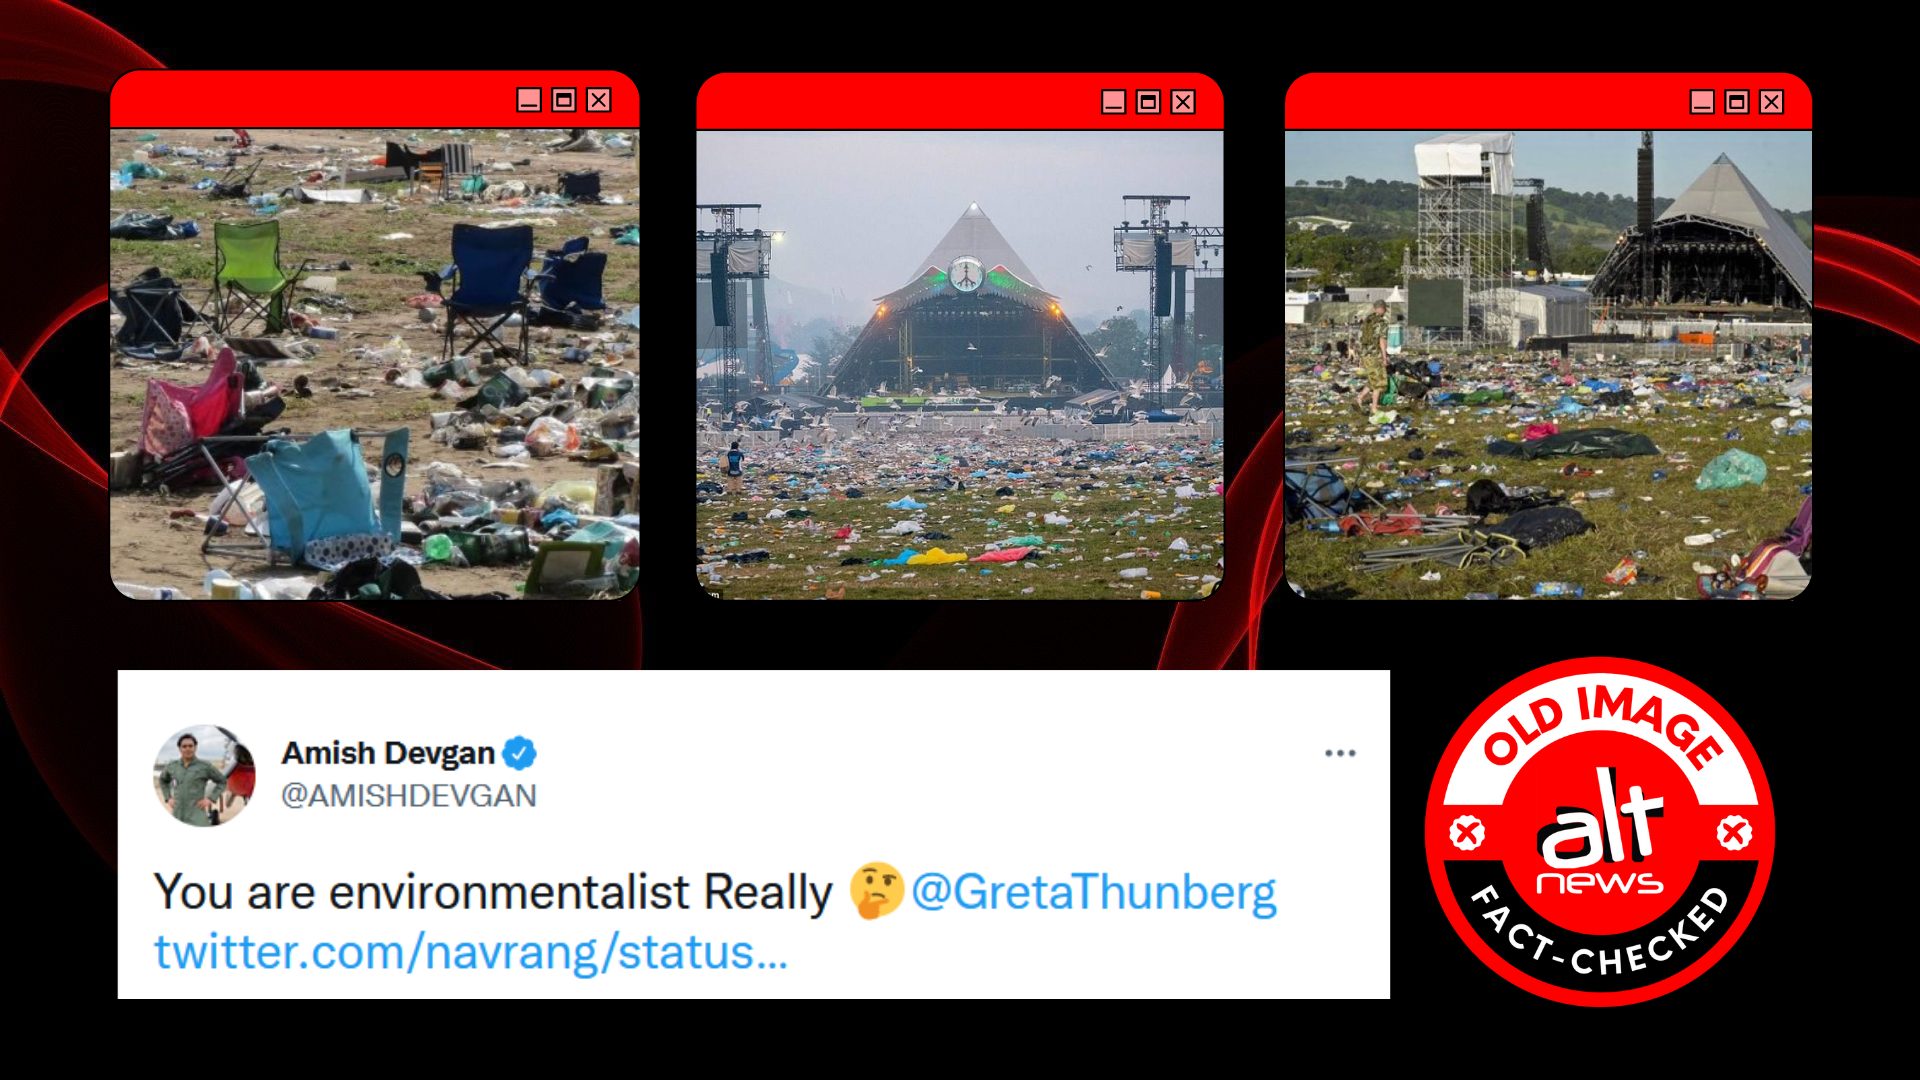 Old photos of trash at Glastonbury Festival shared to target Greta Thunberg - Alt News